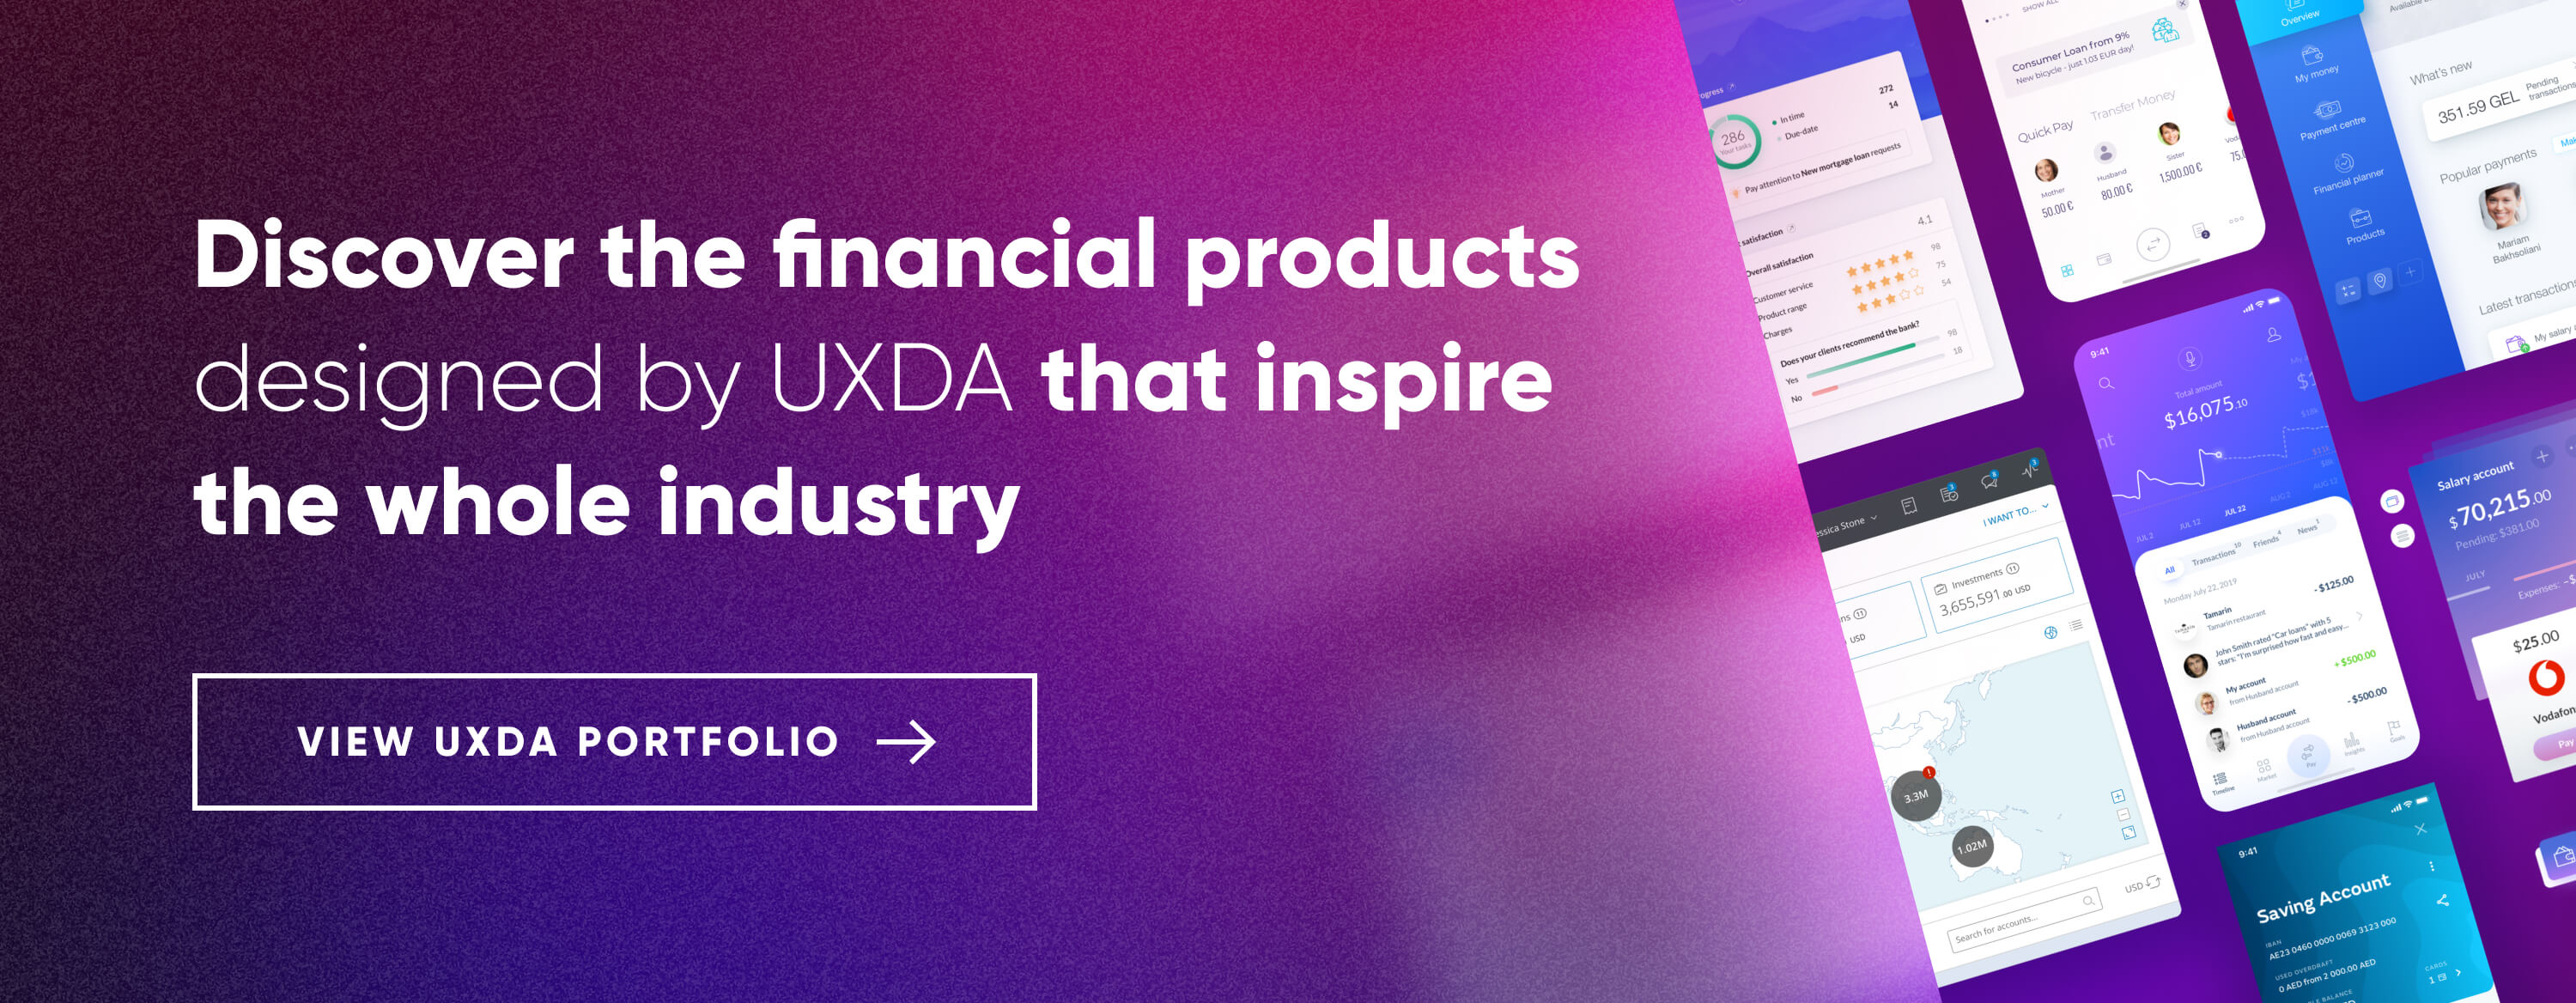 uxda-portfolio-financial-digital-product-inspire-industry-ux-1669633389.jpg